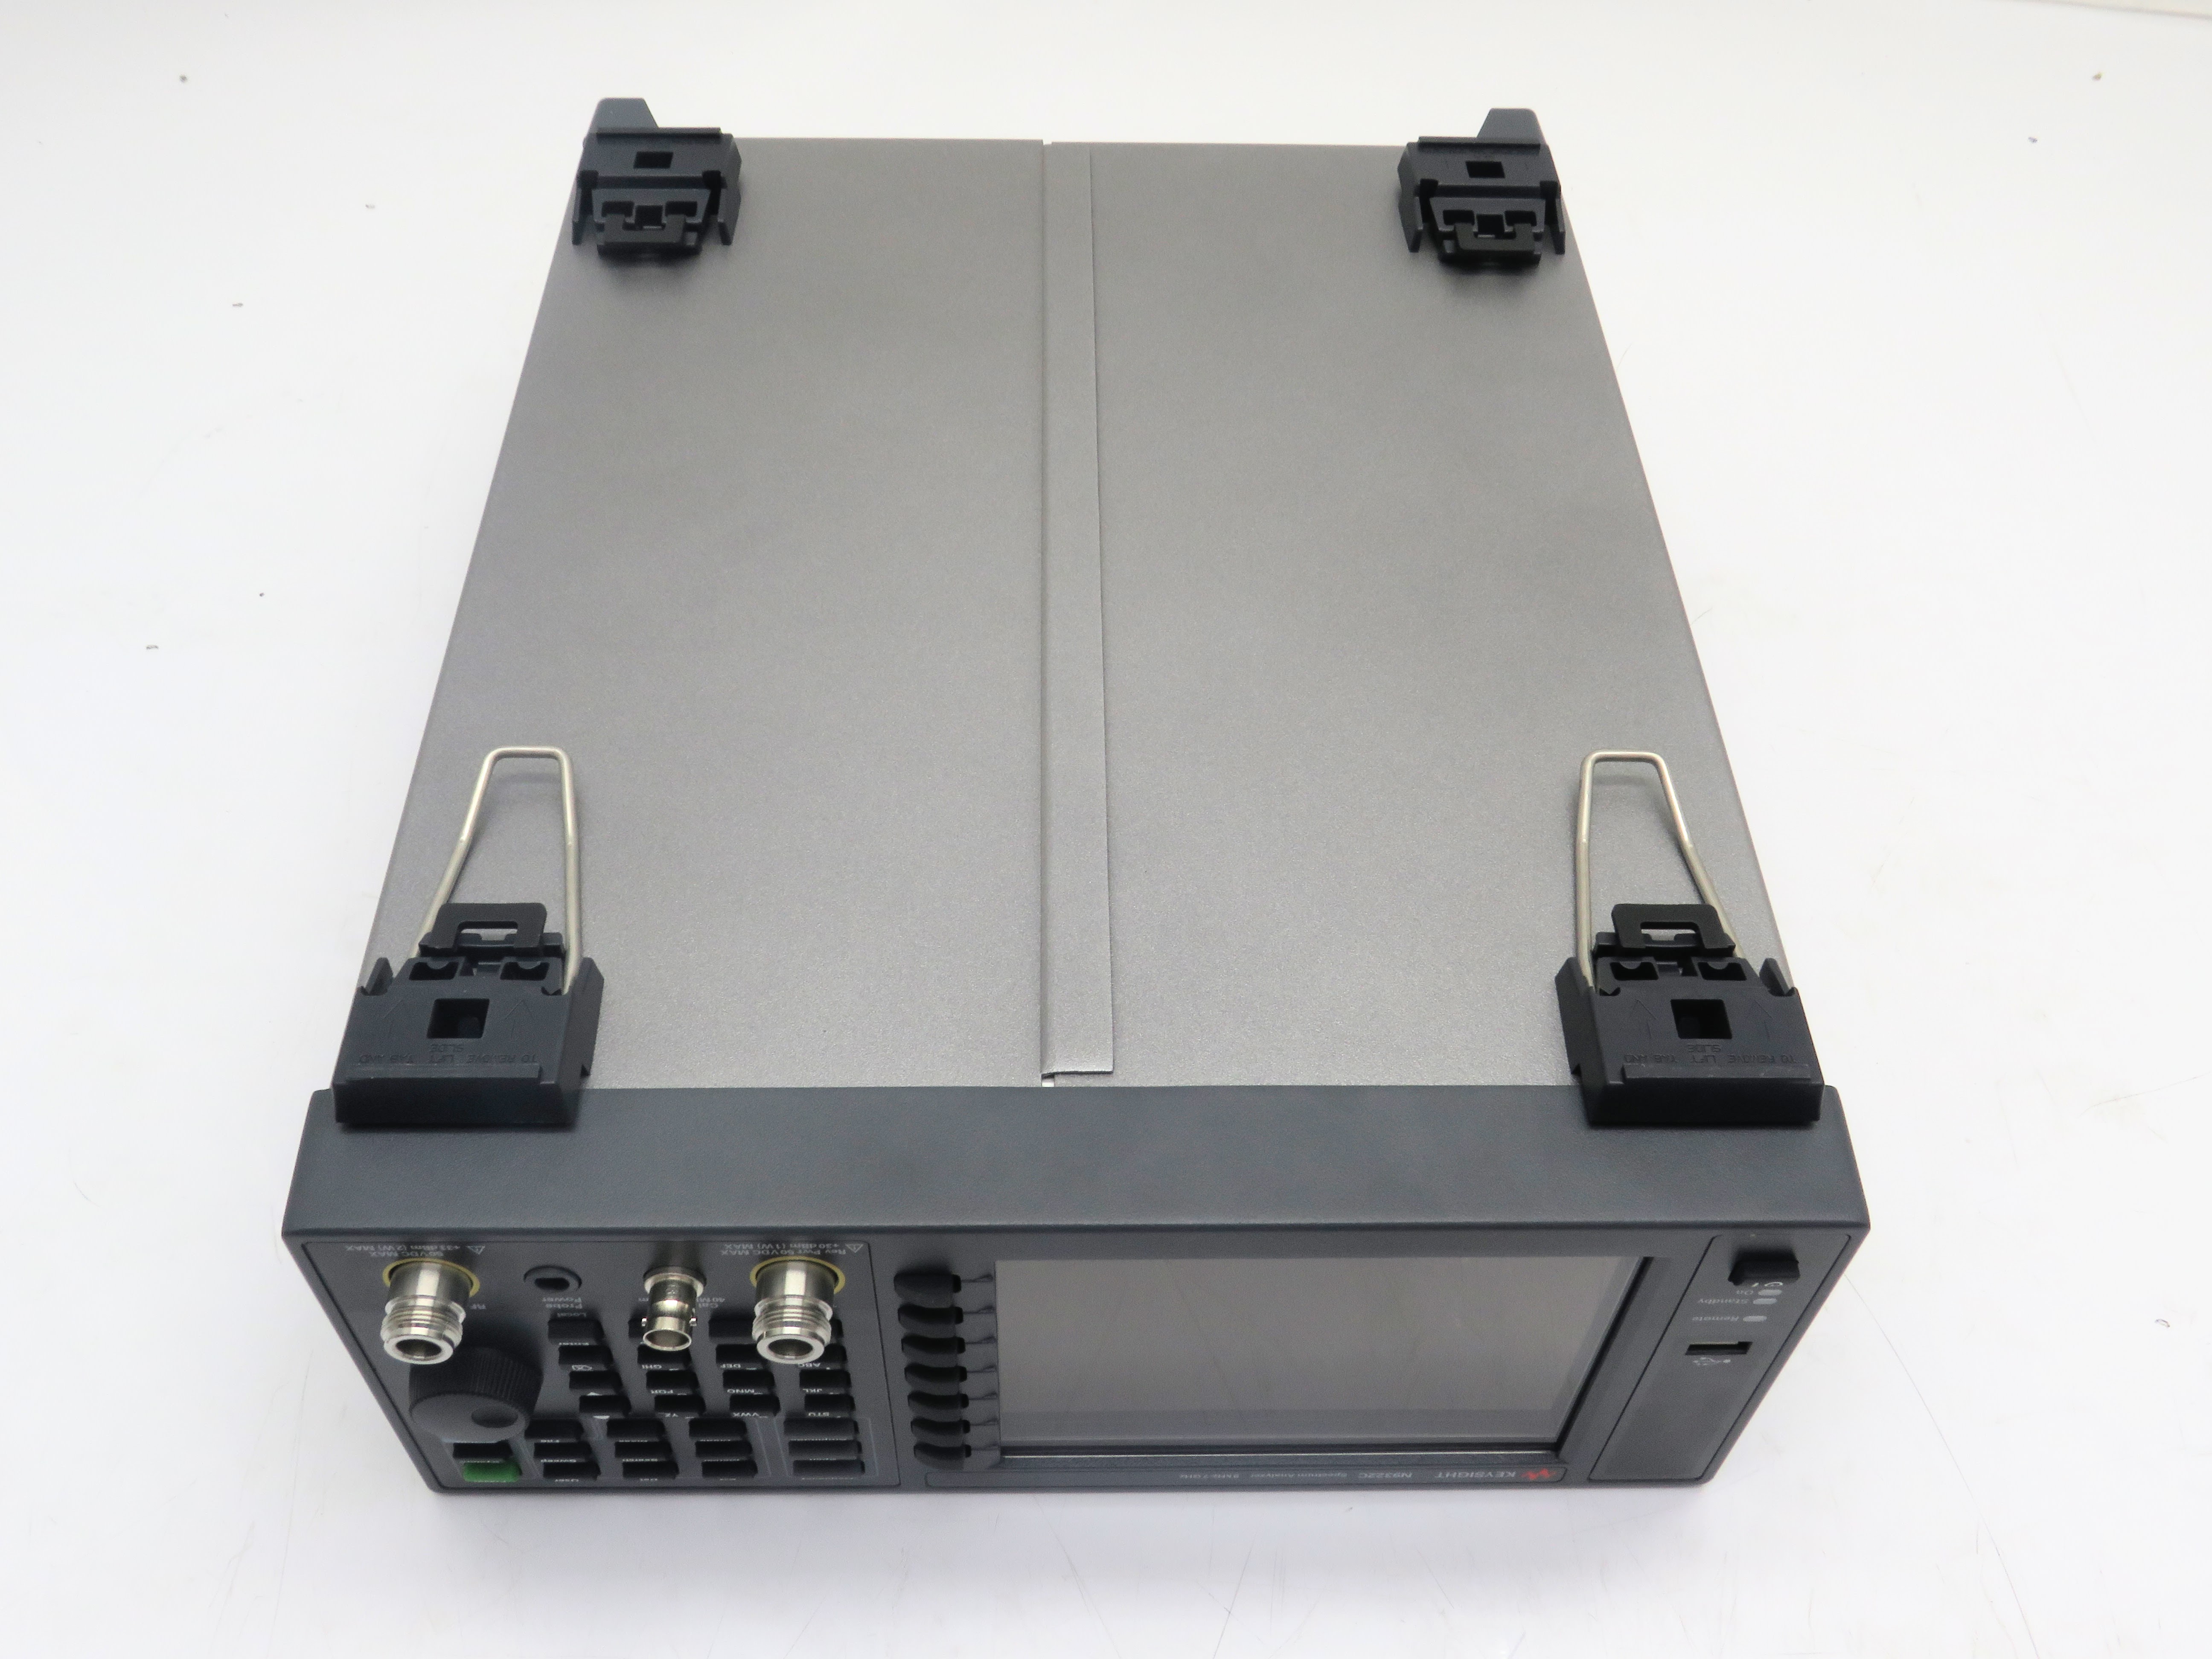 Keysight N9322C Basic Spectrum Analyzer (BSA) / 9 kHz to 7 GHz